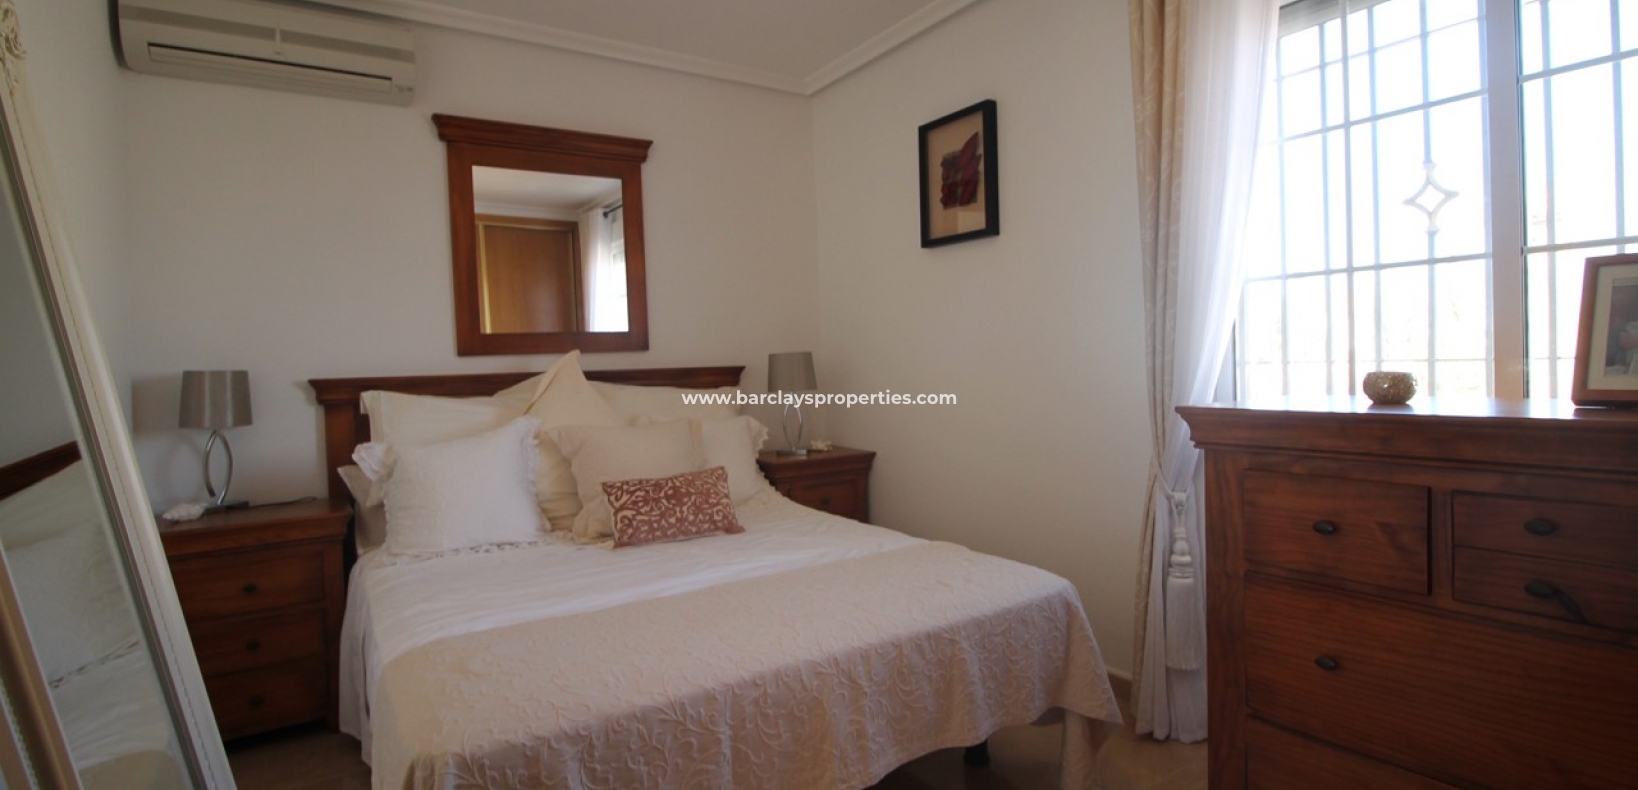 Chambre à coucher - Grande villa individuelle à vendre à La Escuera